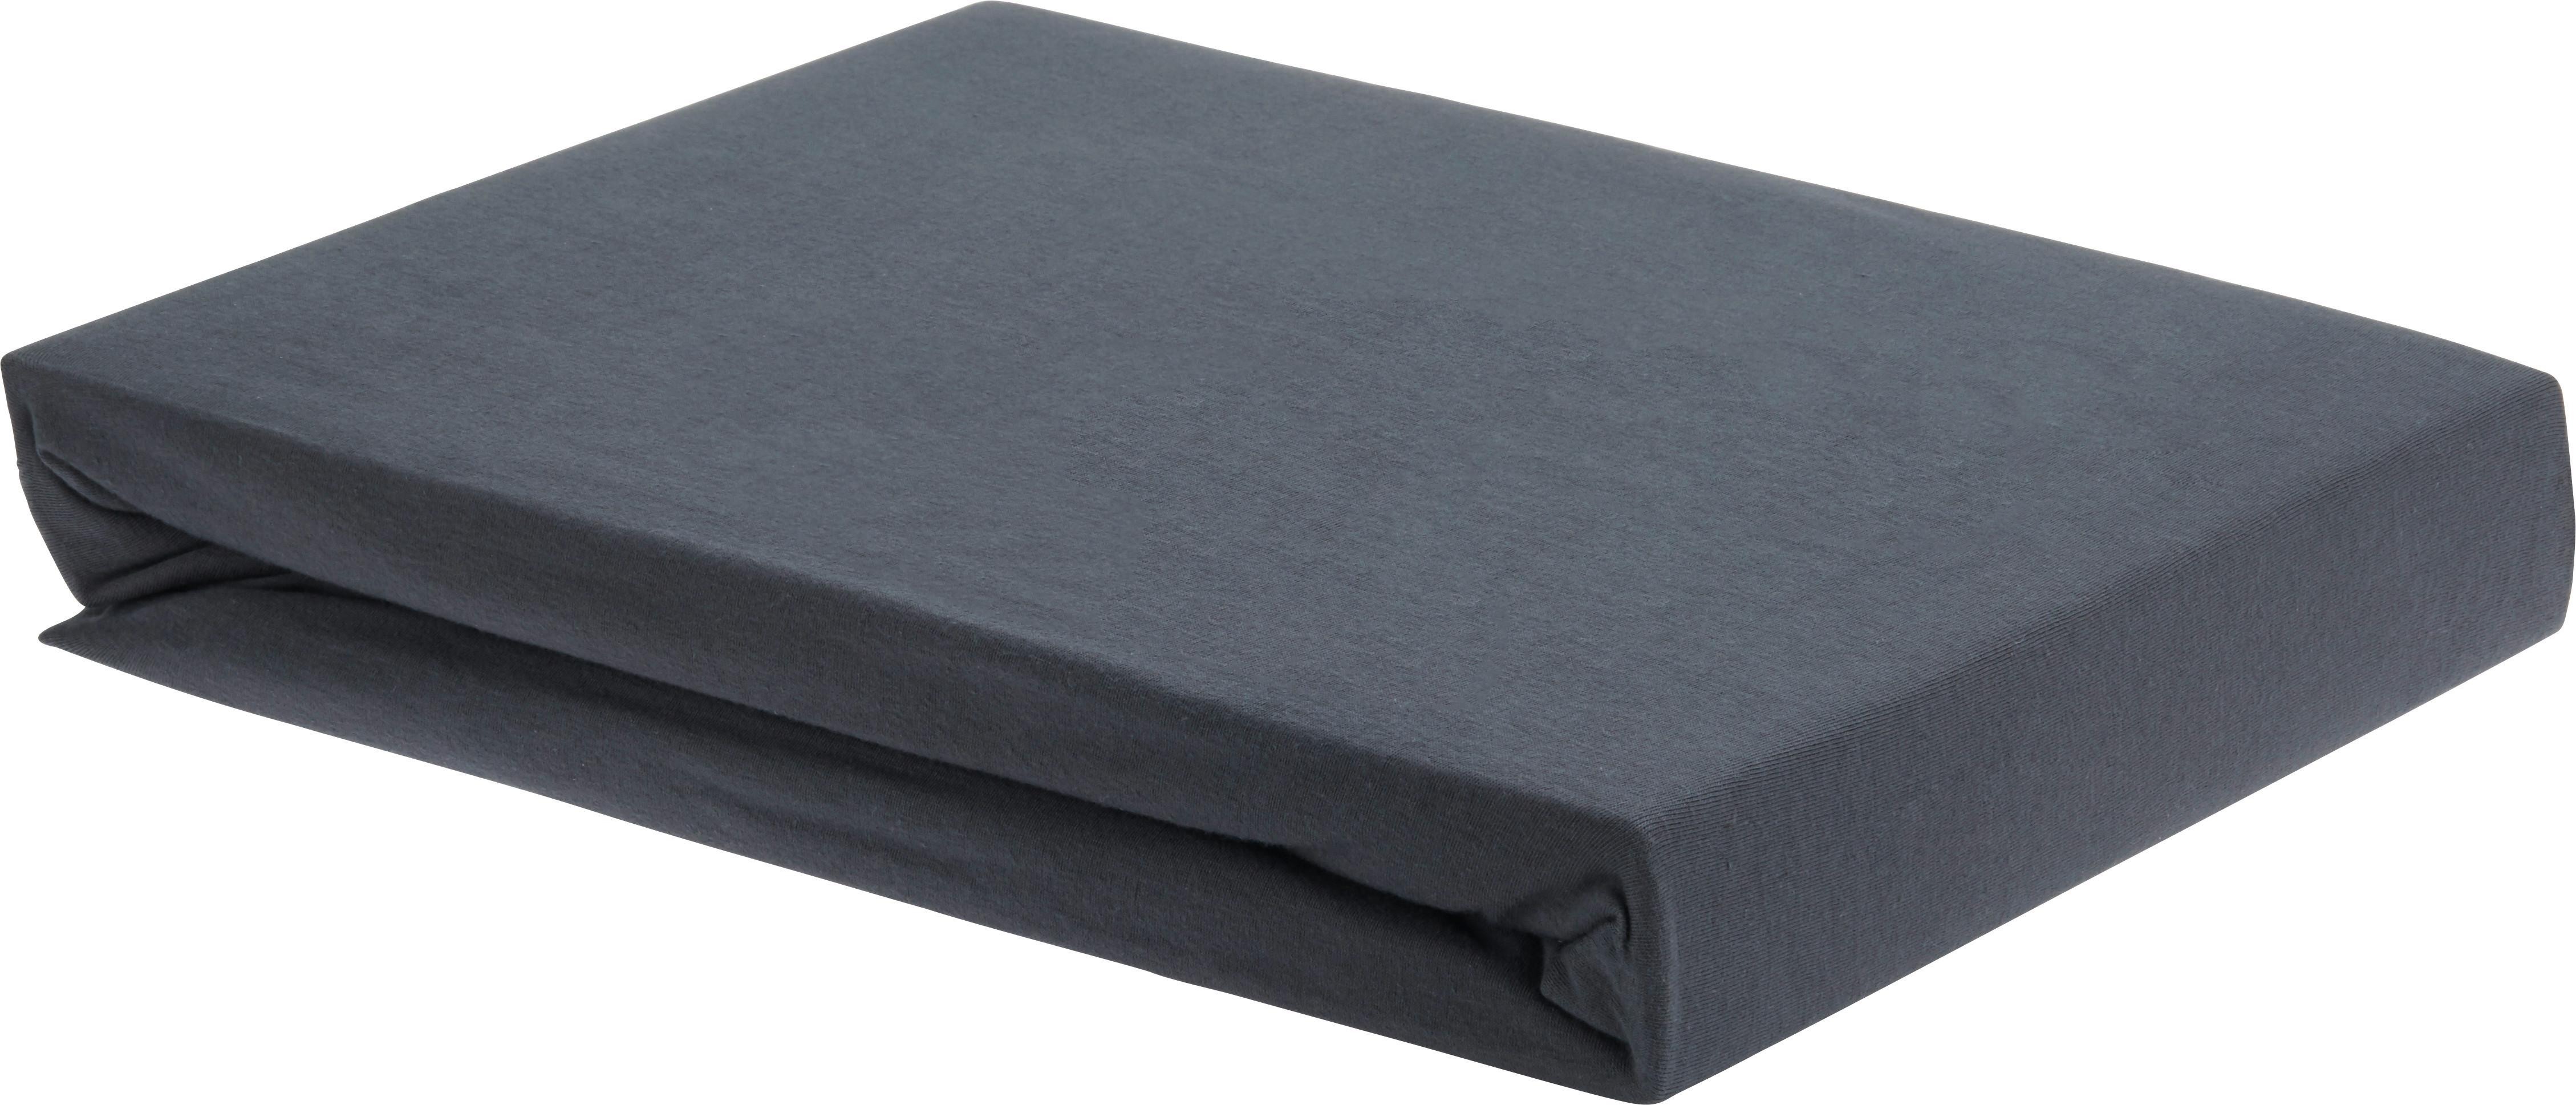 Napenjalna Rjuha Elasthan - antracit, tekstil (180/200/28cm) - Premium Living